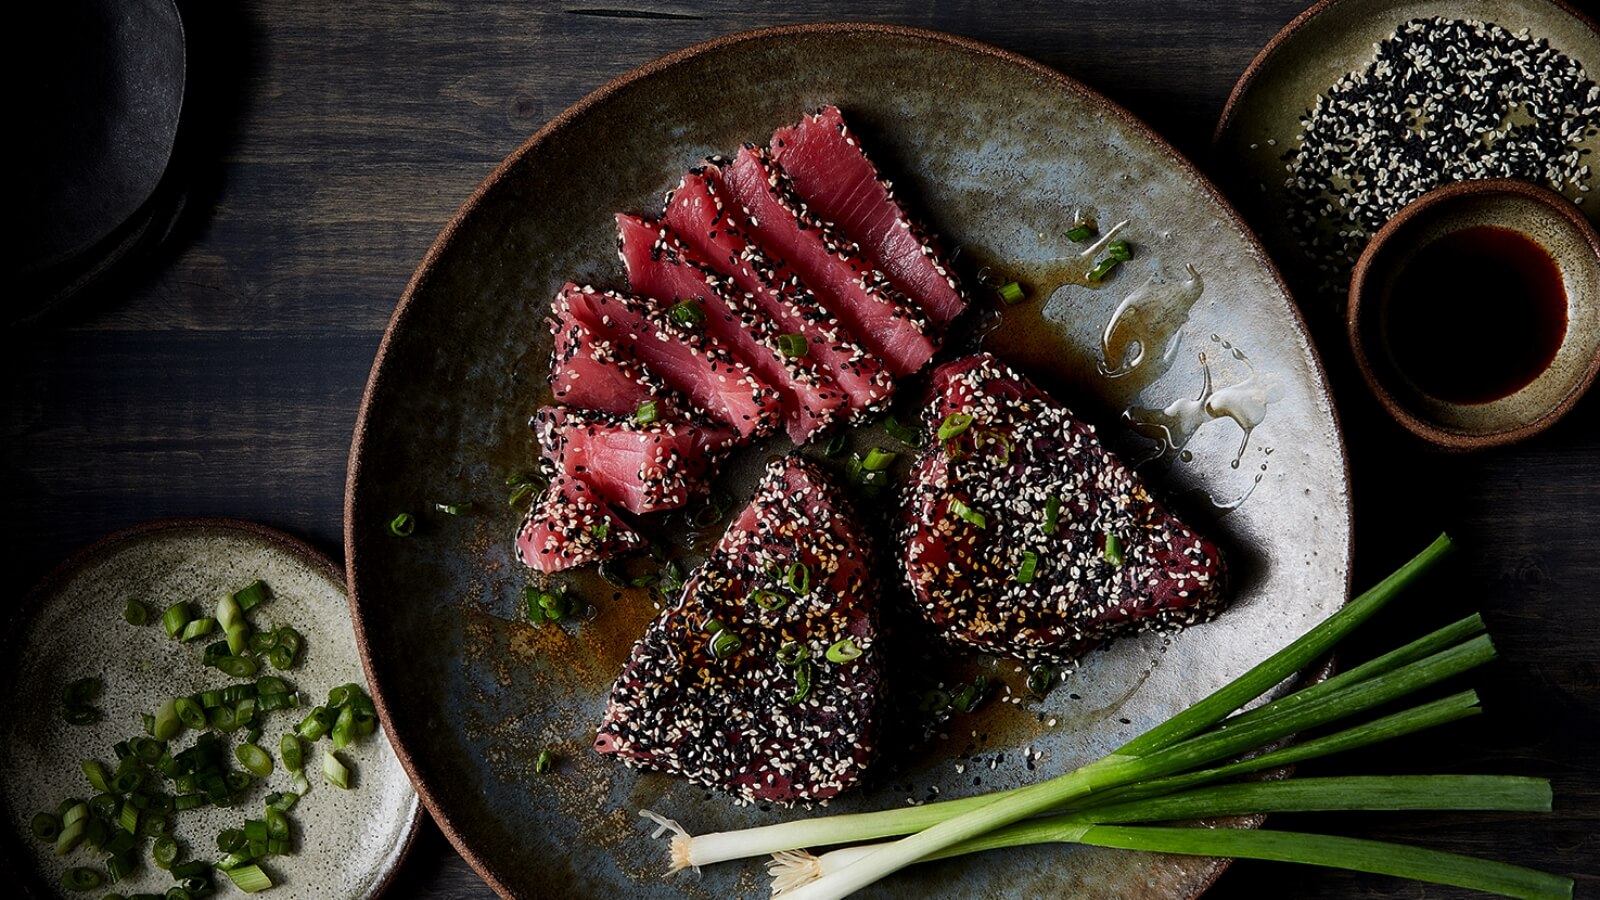 Wild Sashimi Tuna Steak